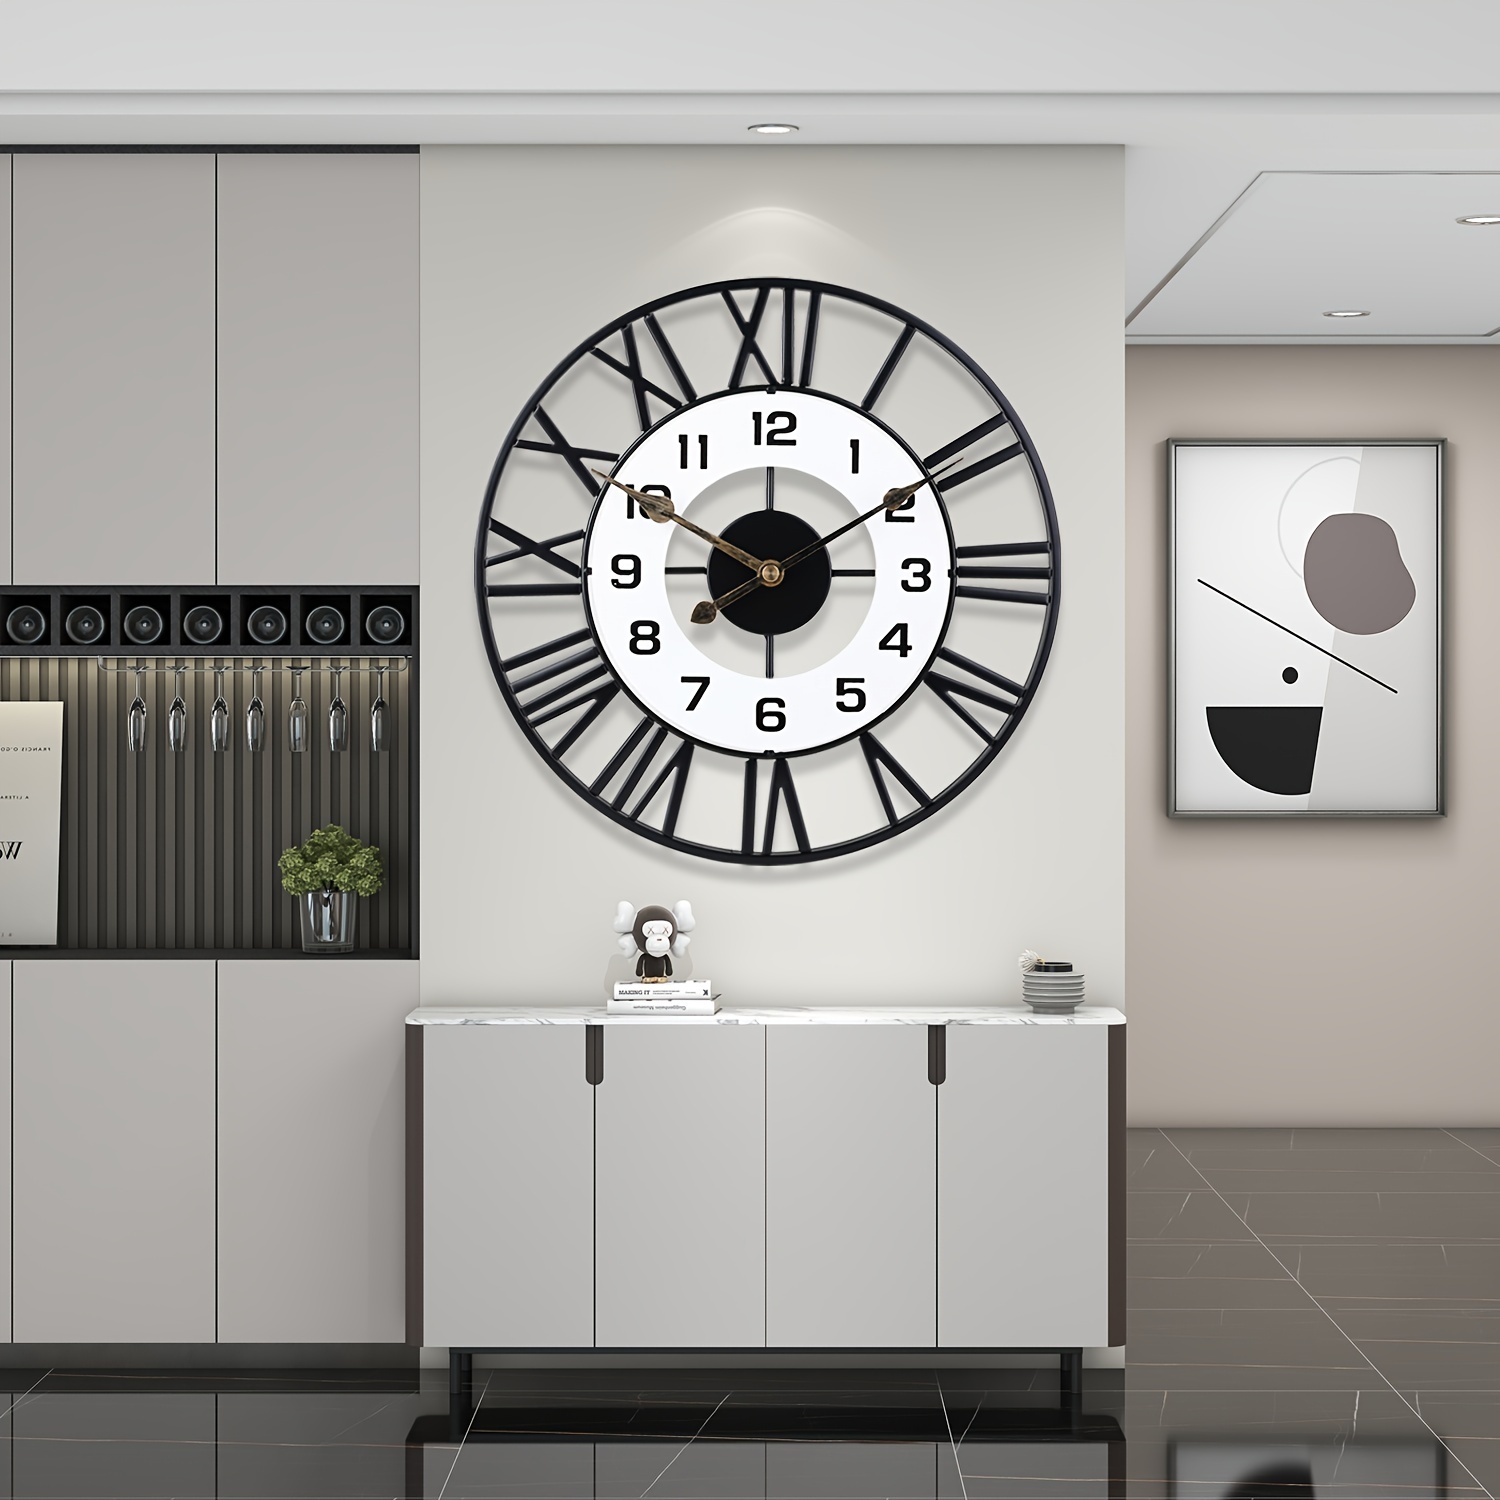 

1pc Large Wall Clock For Living Room Decor, (40cm) 16inch Wall Clock Decorative, Metal Analog Roman Numeral Wall Clock Modern Wall Clocks - Large Clock Home Decor (black)